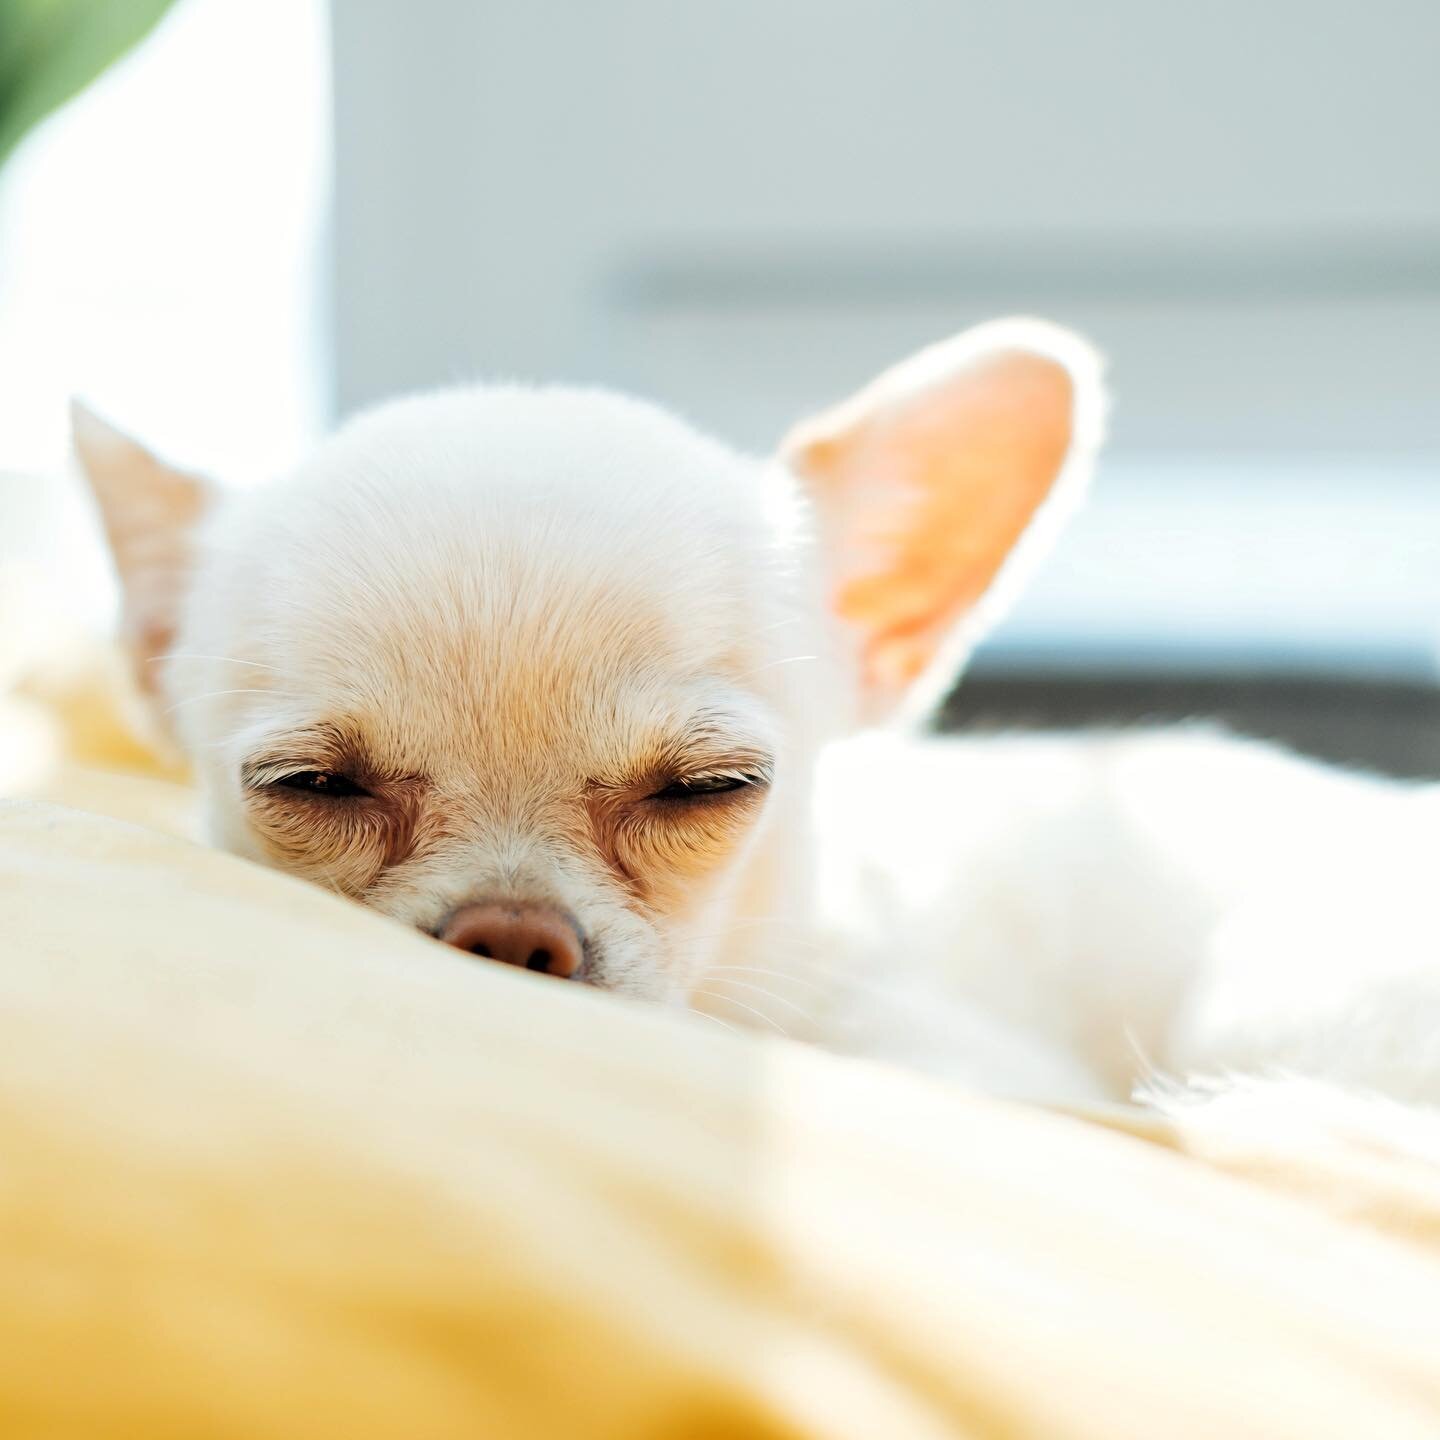 Life is ruff when you're this cute 🐶

.
.
.
.
.
.
#nydog #petmagazine #chihuahuasofinstagram #dogmemesofinstagram #dogmemesofinsta #dogmemesdaily #puppydogpals #dogmomlifestyle #dogmomprobs #petmagazine #dogmagazine #onlinemedia #creatorsofcolor #cr